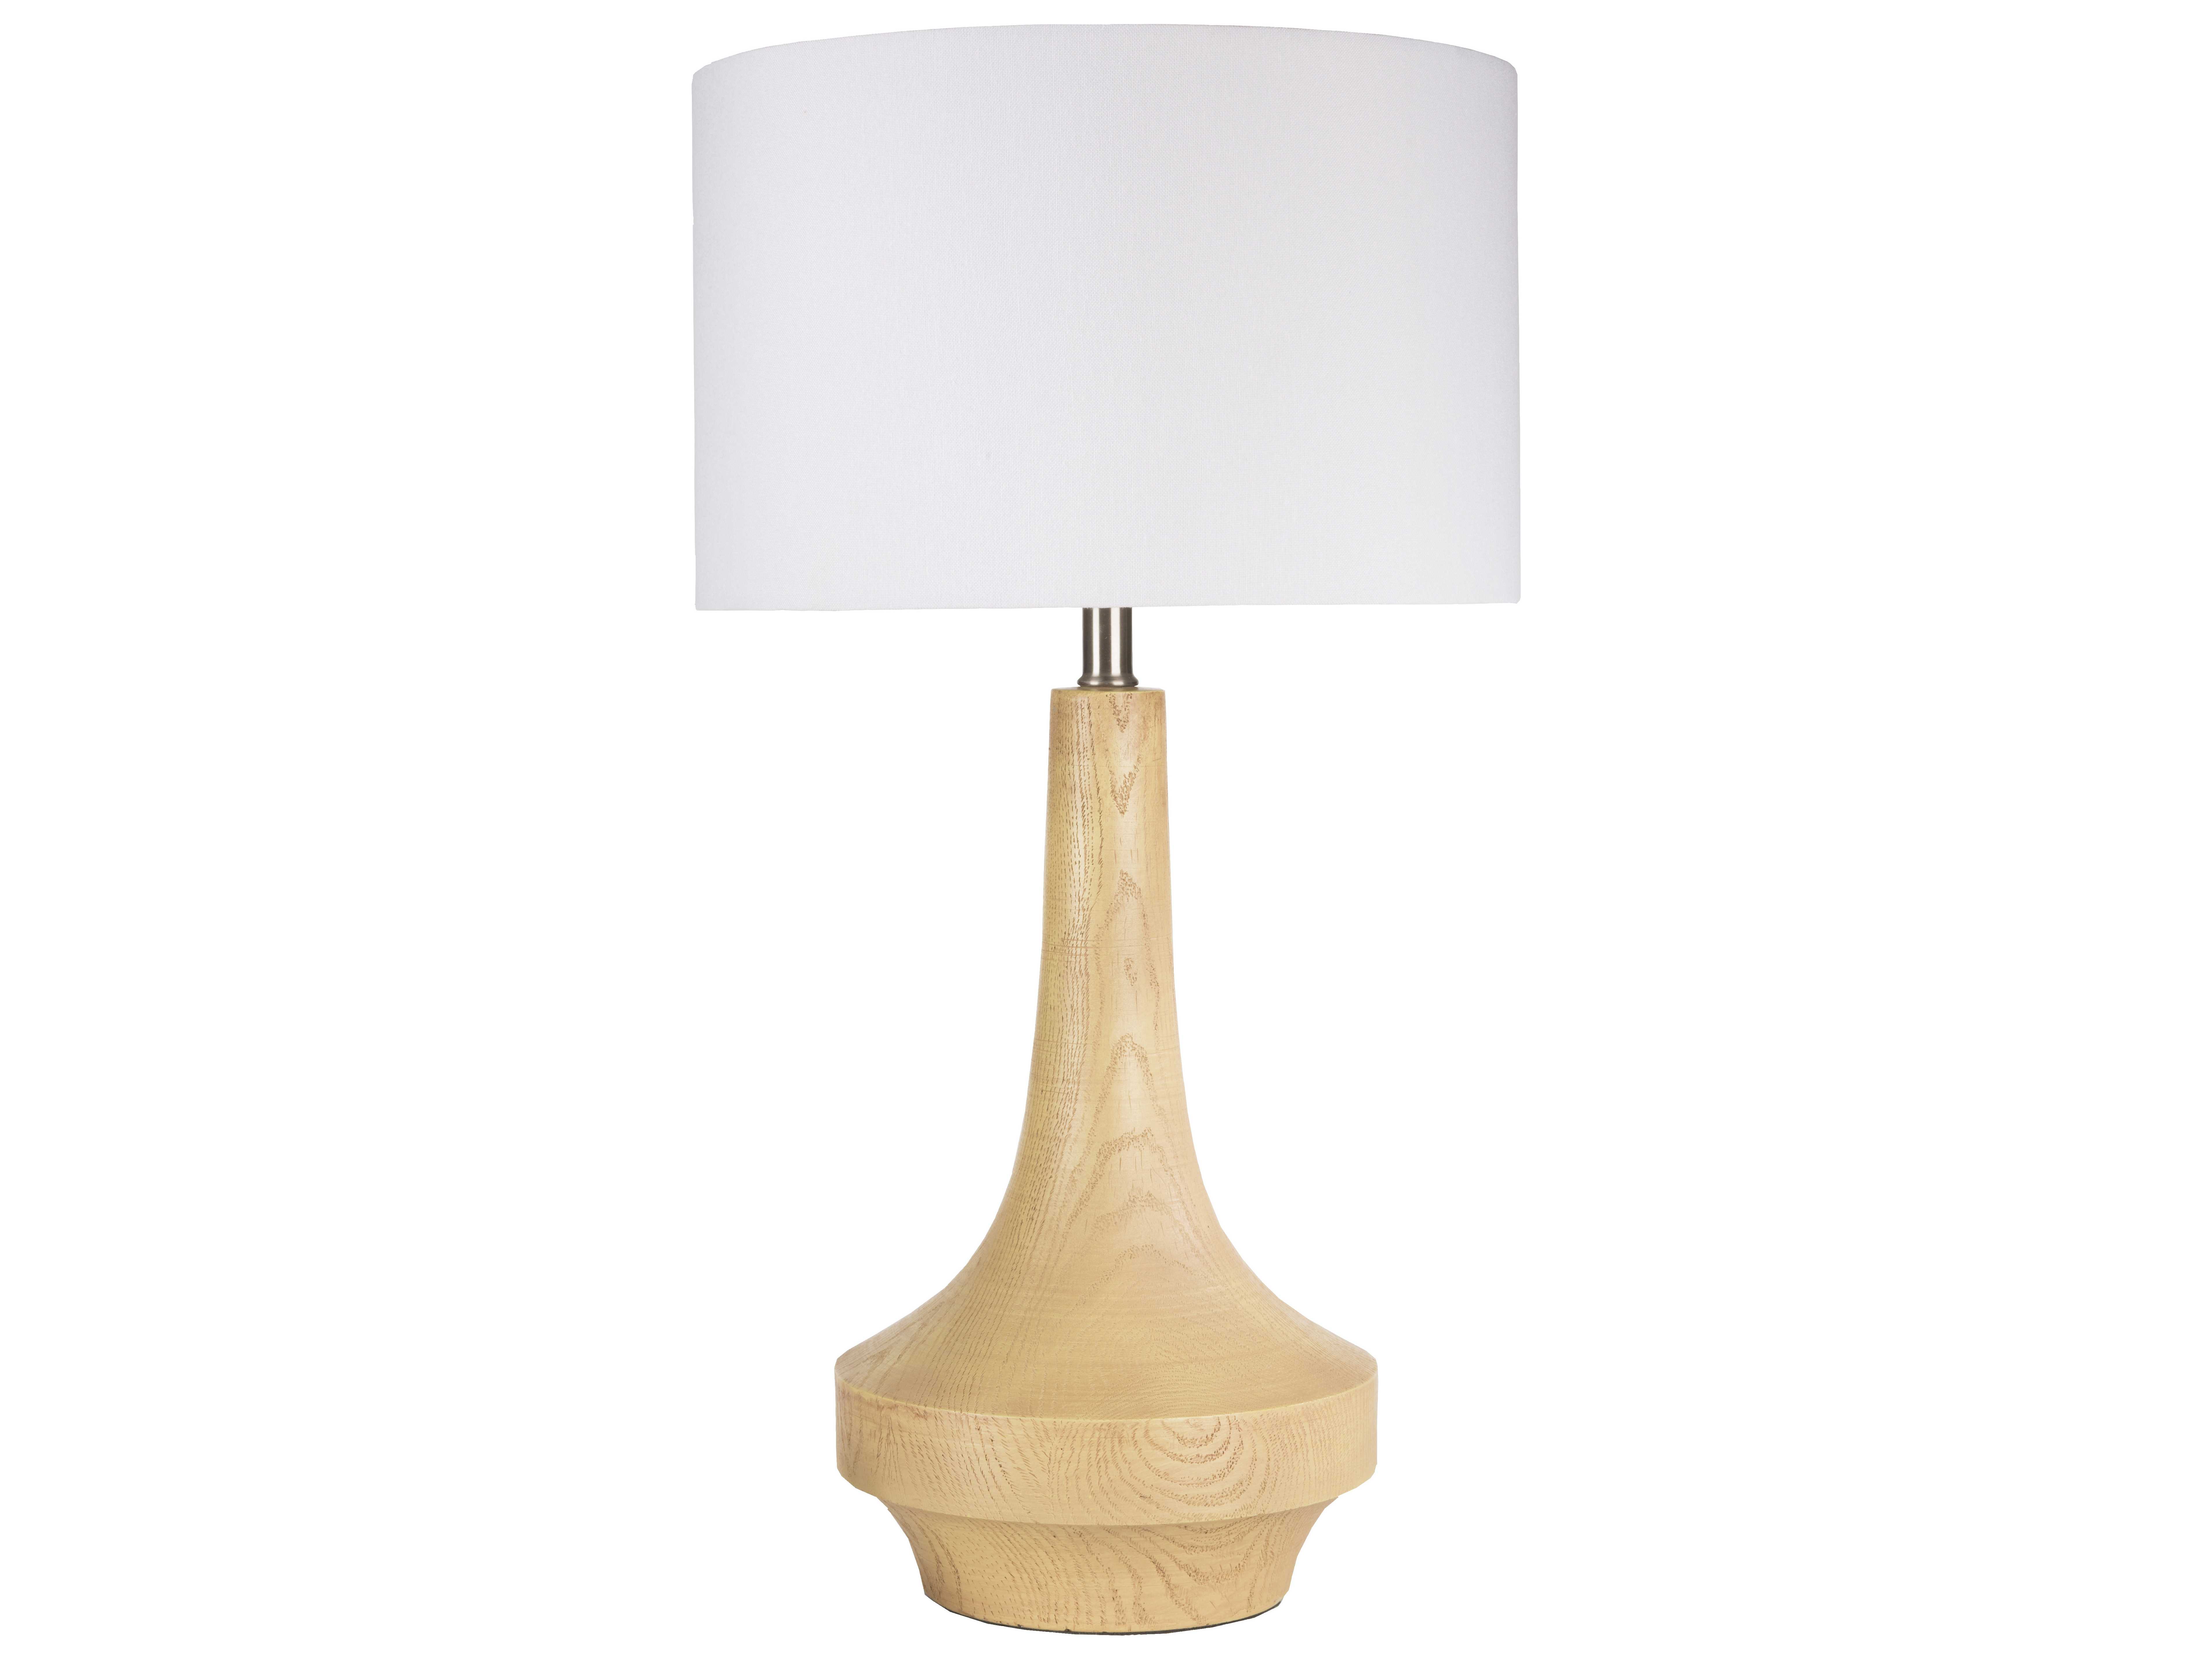 Surya Carson Light Wood Tone Table Lamp, Carson Table Lamp